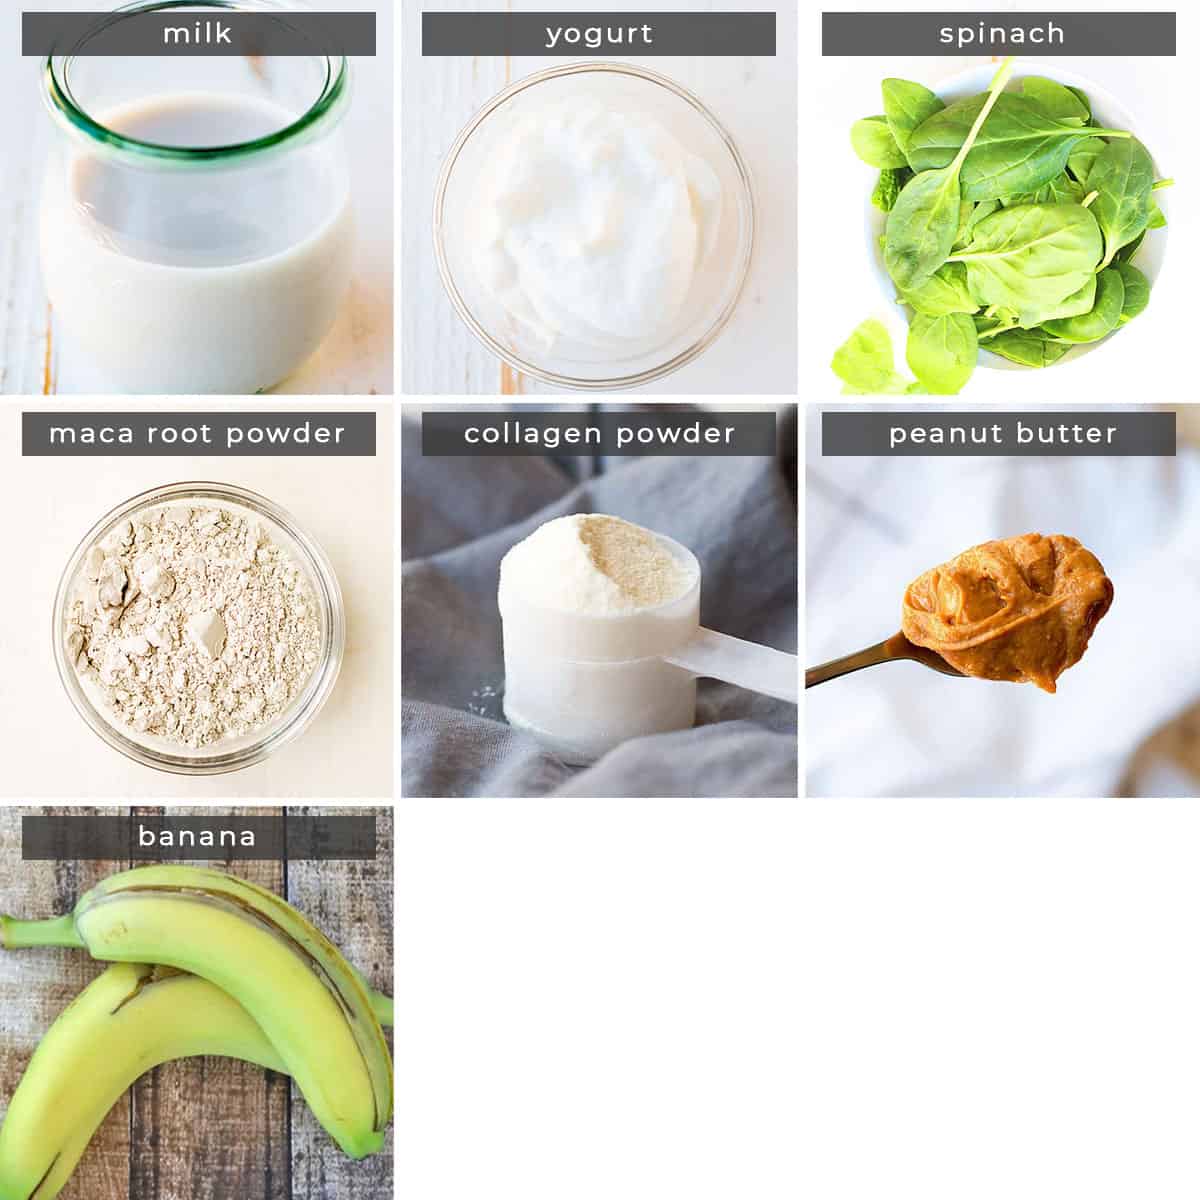 Image containing recipe ingredients milk, yogurt, spinach, maca root powder, collagen powder, peanut butter, and bananas.